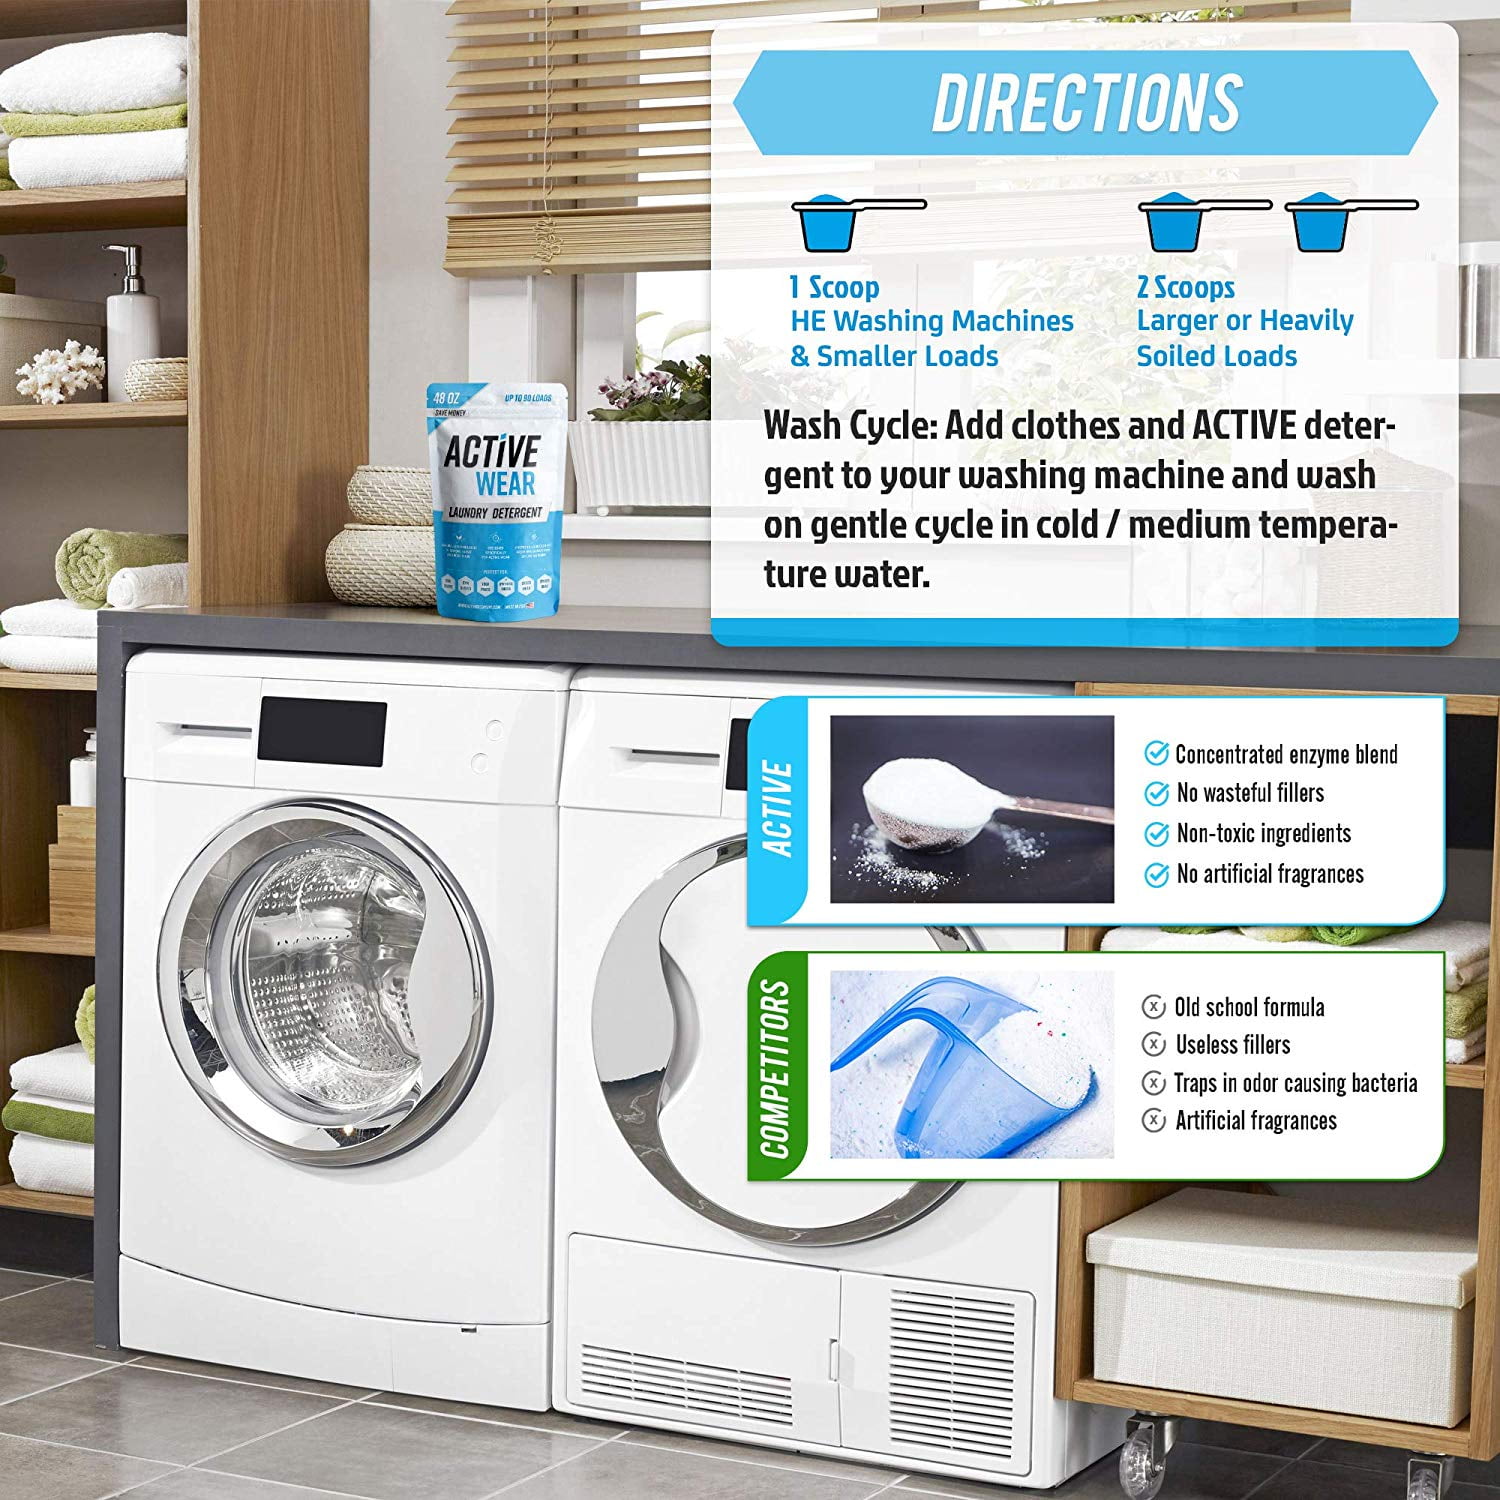 Activewear Laundry Detergent - Workout Clothes Deodorizer